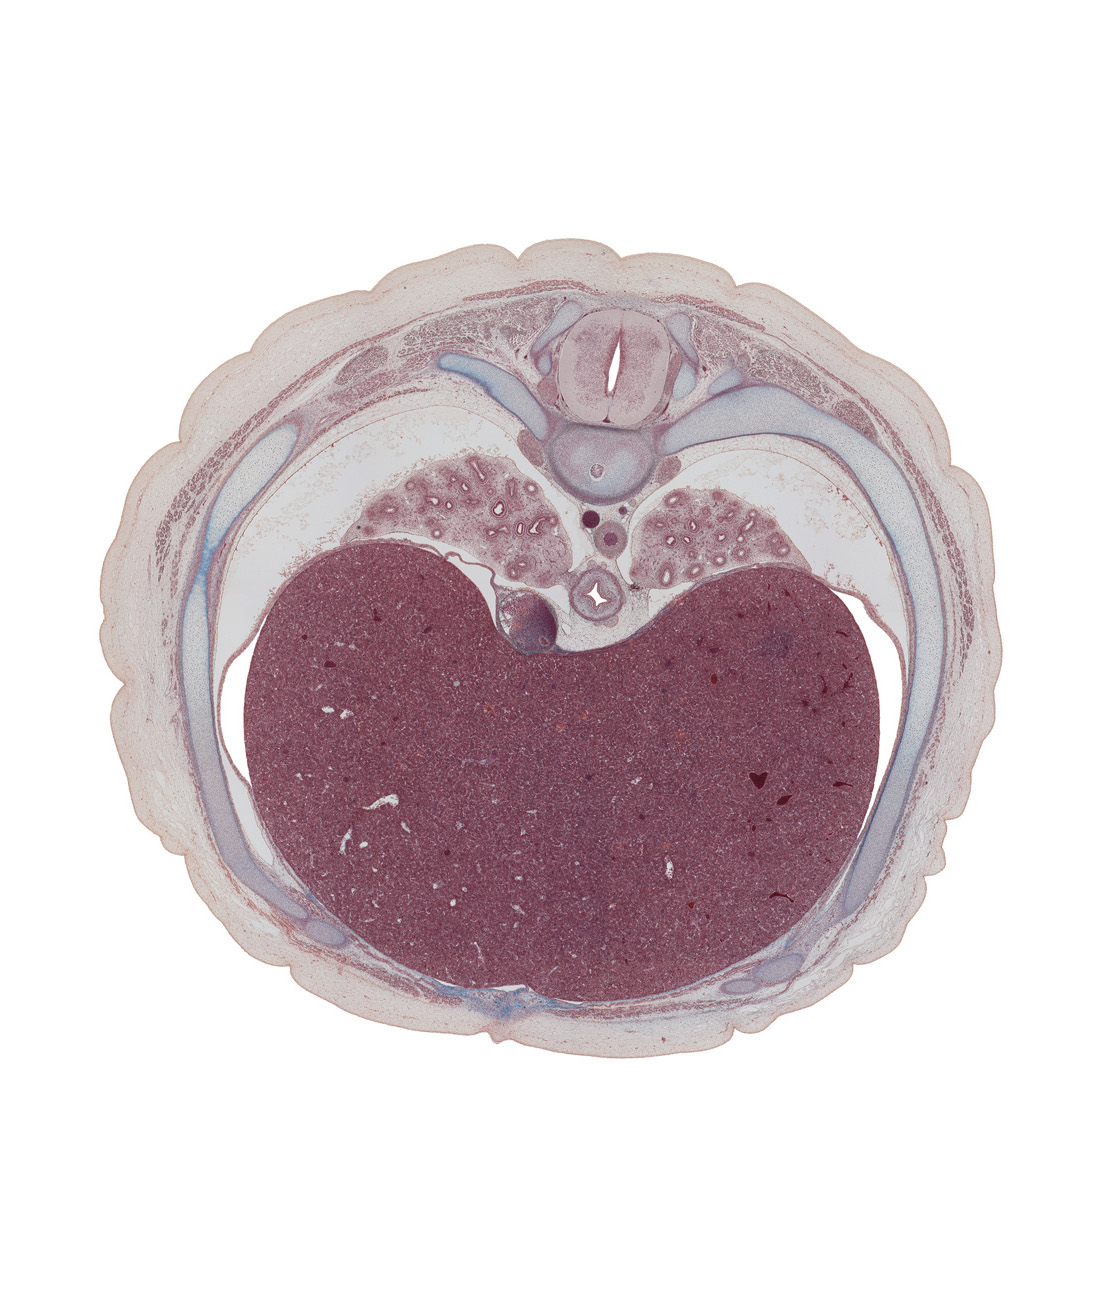 T-7 / T-8 interganglion region, T-7 / T-8 intervertebral disc, anterior spinal artery, central tendon of diaphragm, costal margin, costotransverse joint, diaphragm, inferior vena cava, left lobe of liver, left vagus nerve (CN X), lower lobe of left lung, lower lobe of right lung, notochord, peritoneal cavity, pleural cavity, rib 8, right lobe of liver, right vagus nerve (CN X), sympathetic trunk